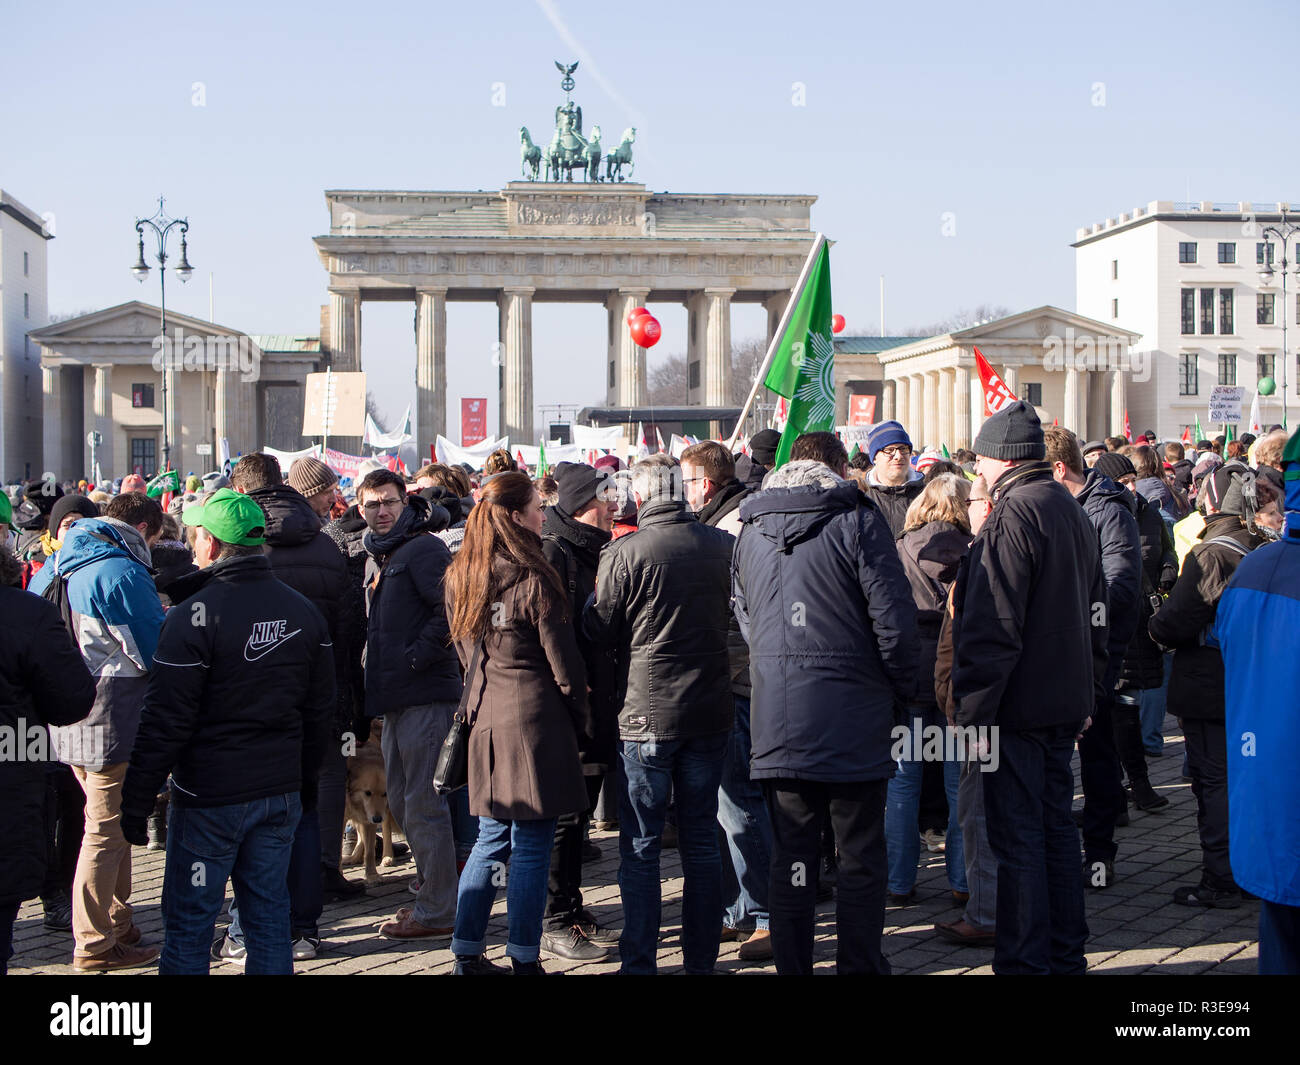 BERLIN, GERMANY - FEBRUARY 14, 2017: Demonstrators At Labor Union GEW Demonstration At Brandenburg Gate, Berlin Stock Photo